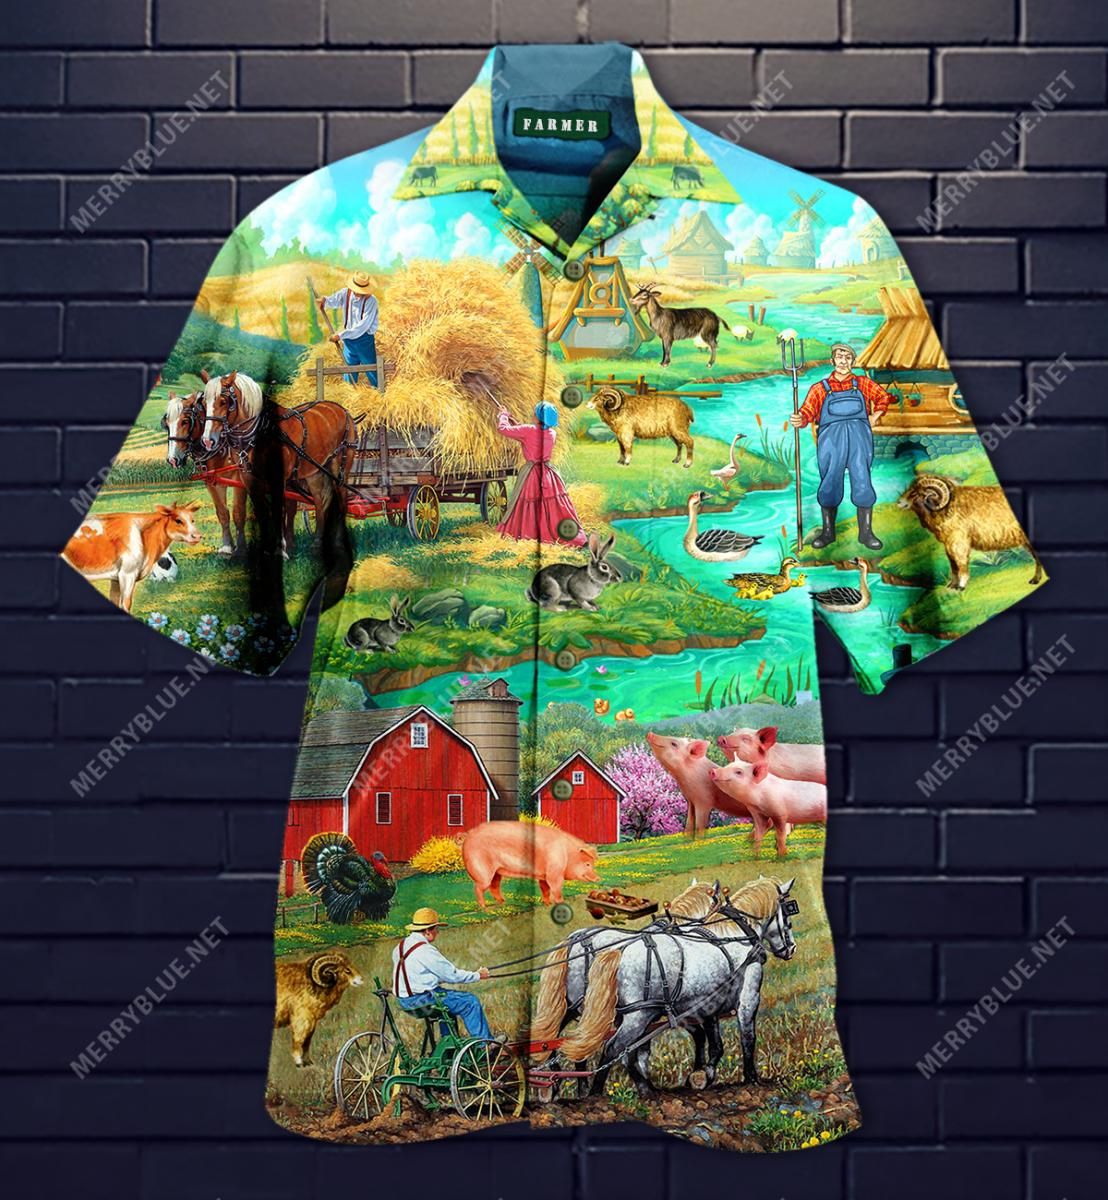 Farmer Is The Heaven Aloha Hawaiian Shirt Colorful Short Sleeve Summer Beach Casual Shirt For Men And Women